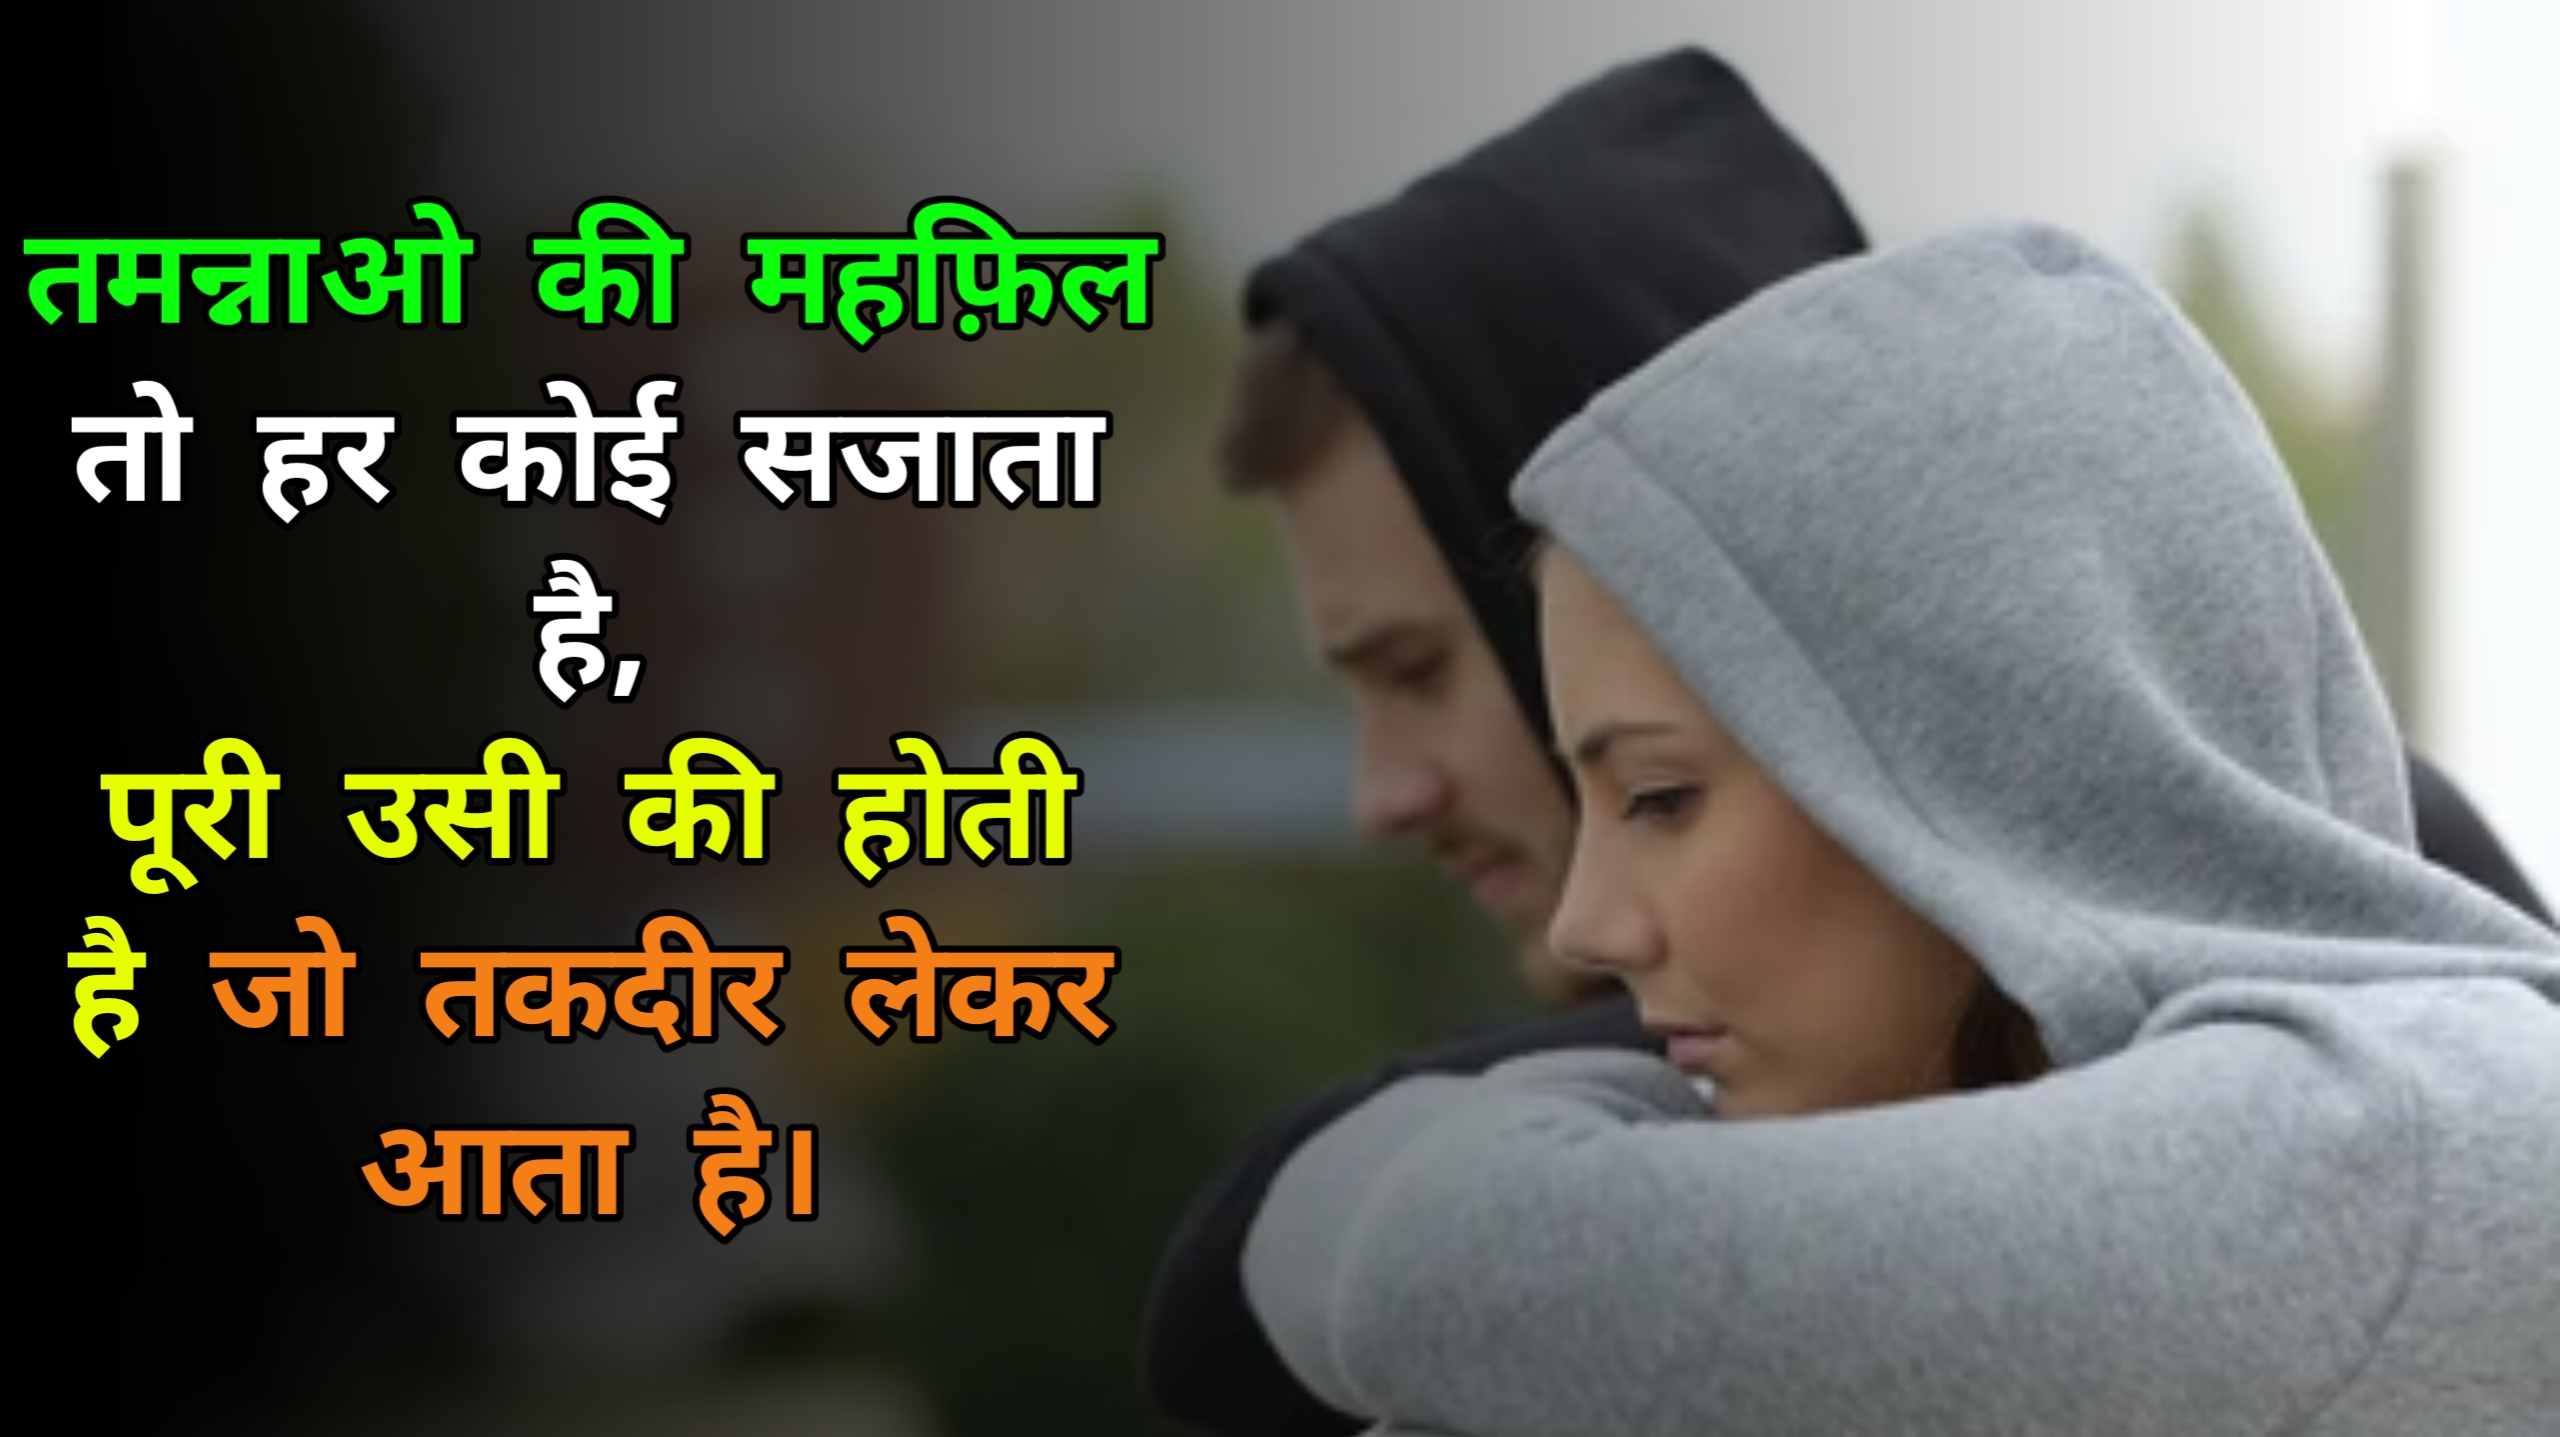 heart touching shayari in Hindi | heart touching shayari | emotional heart touching shayari,100 Emotional Heart Touching Shayari Sad and Love for Girlfriend In Hindi
